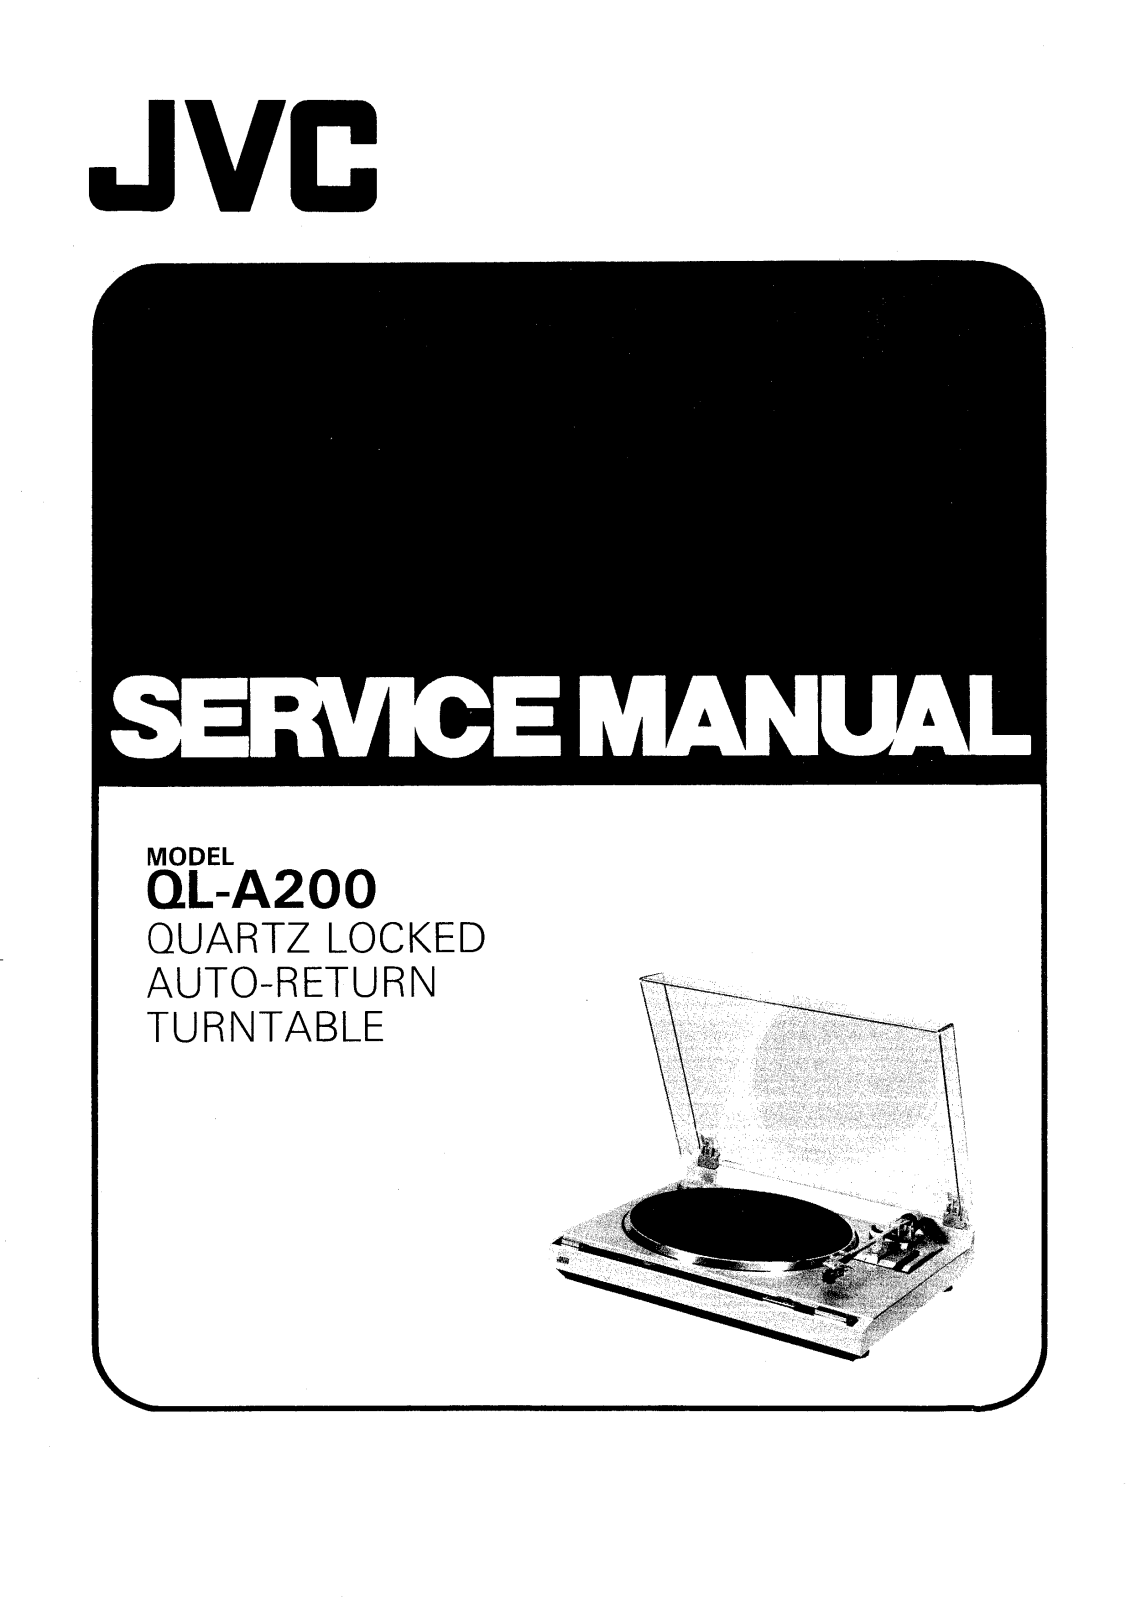 Jvc QL-A200 Service Manual